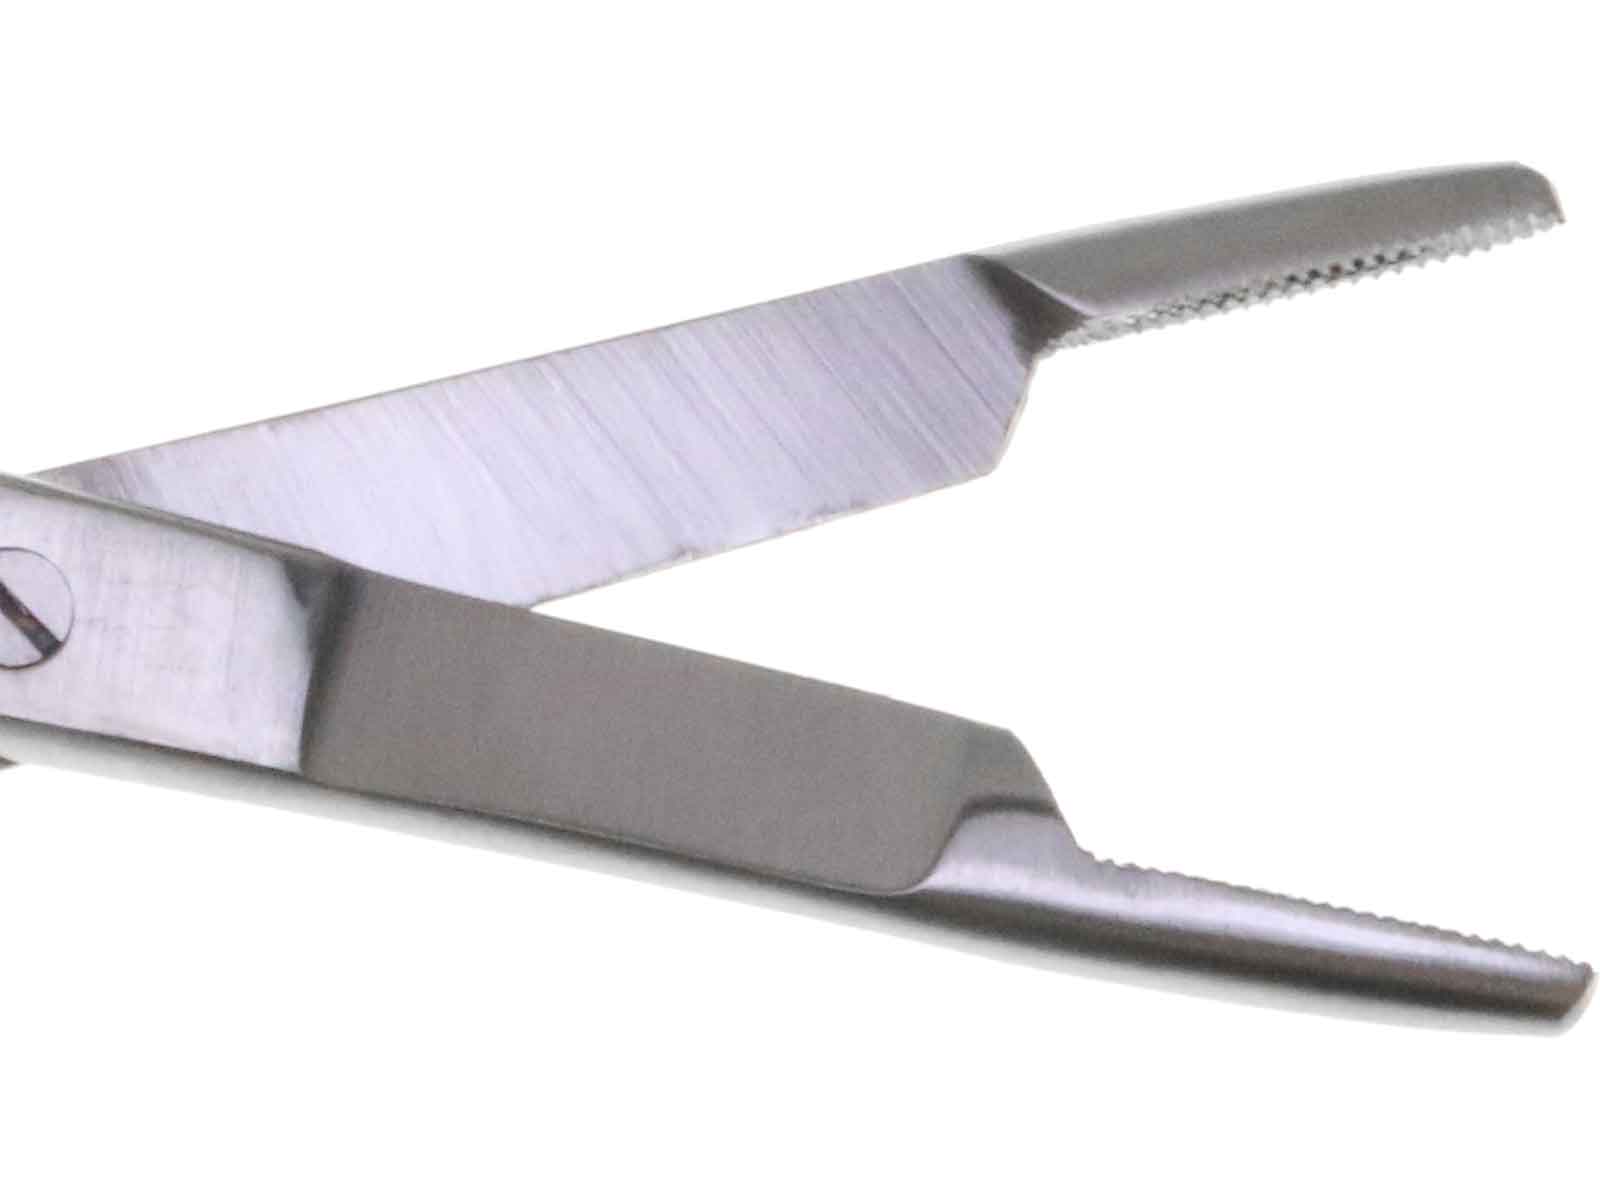 5.5 inch Serrated Hemostat with Scissors